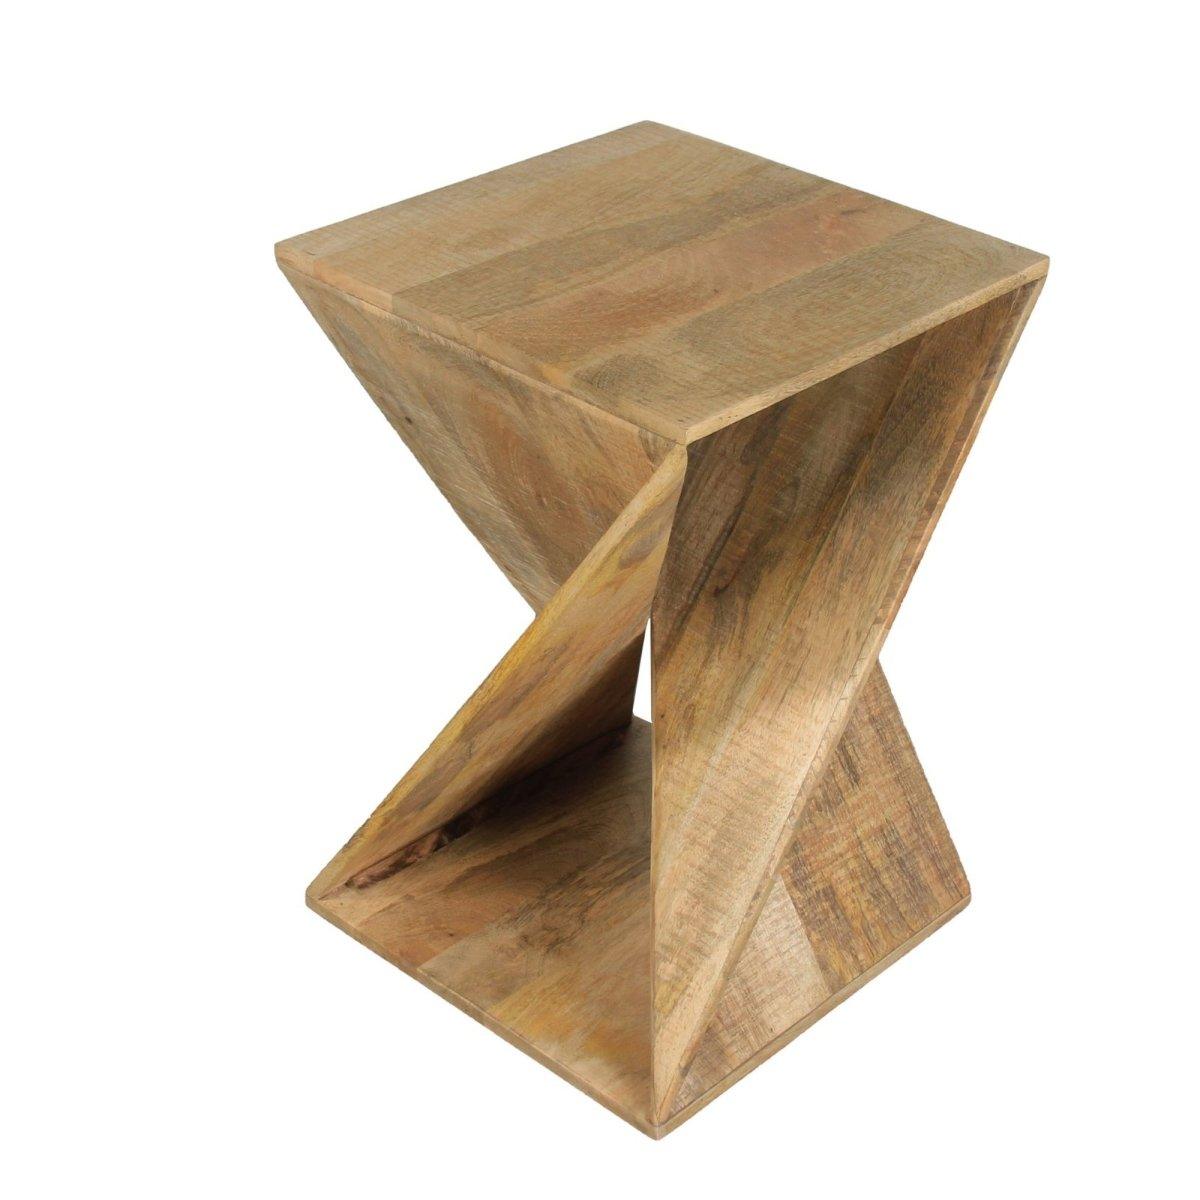 Felt Illusion Mango wood End Table - Rustic Furniture Outlet